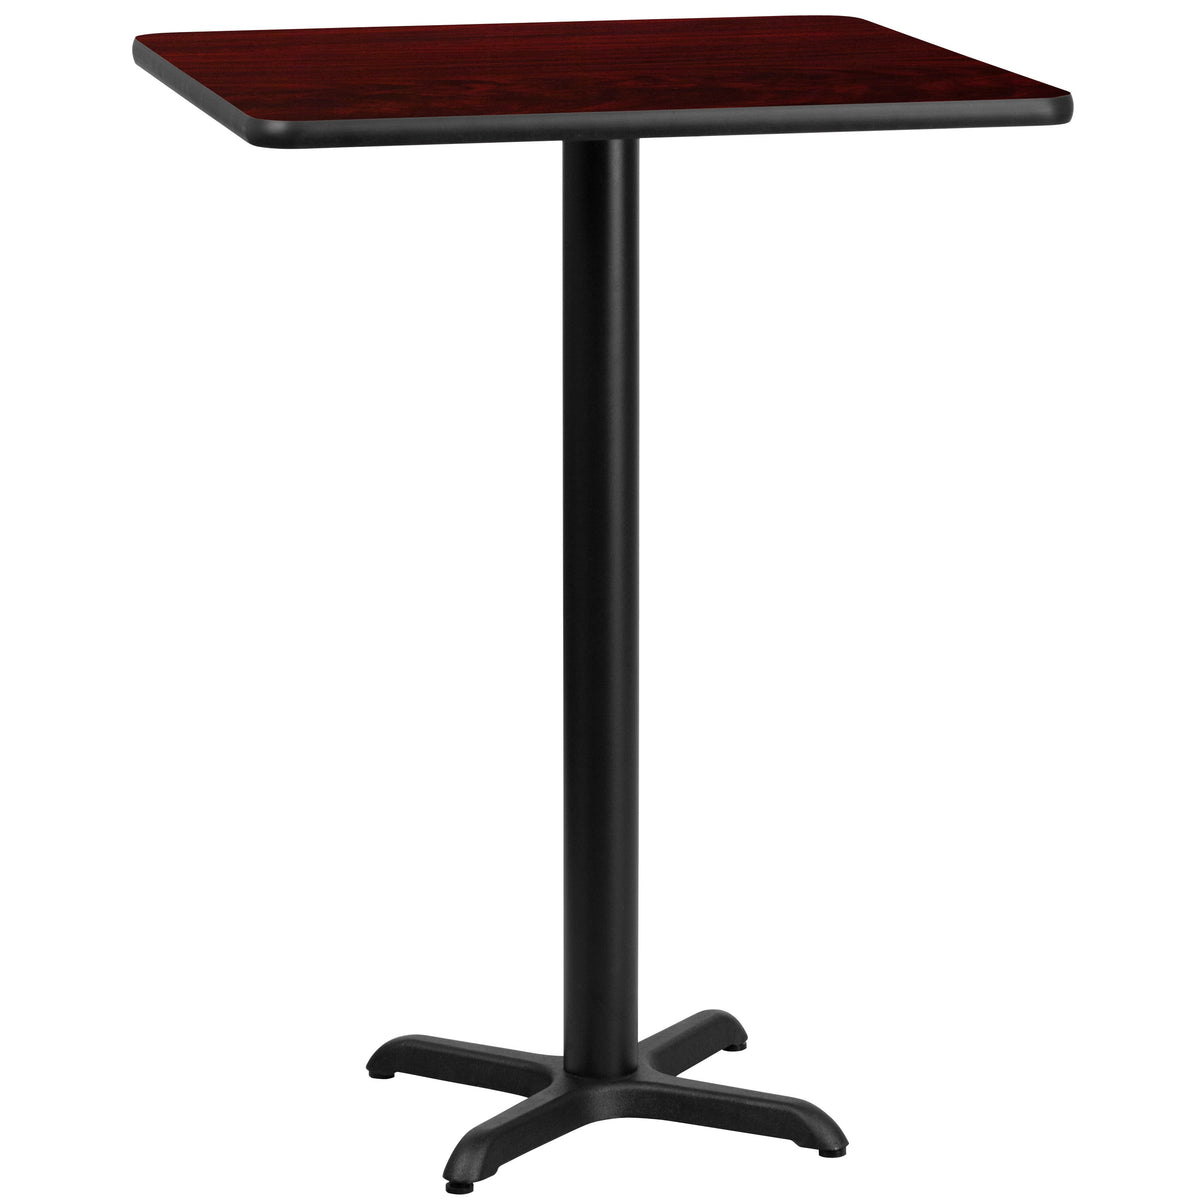 Mahogany |#| 30inch Square Mahogany Laminate Table Top with 22inch x 22inch Bar Height Table Base